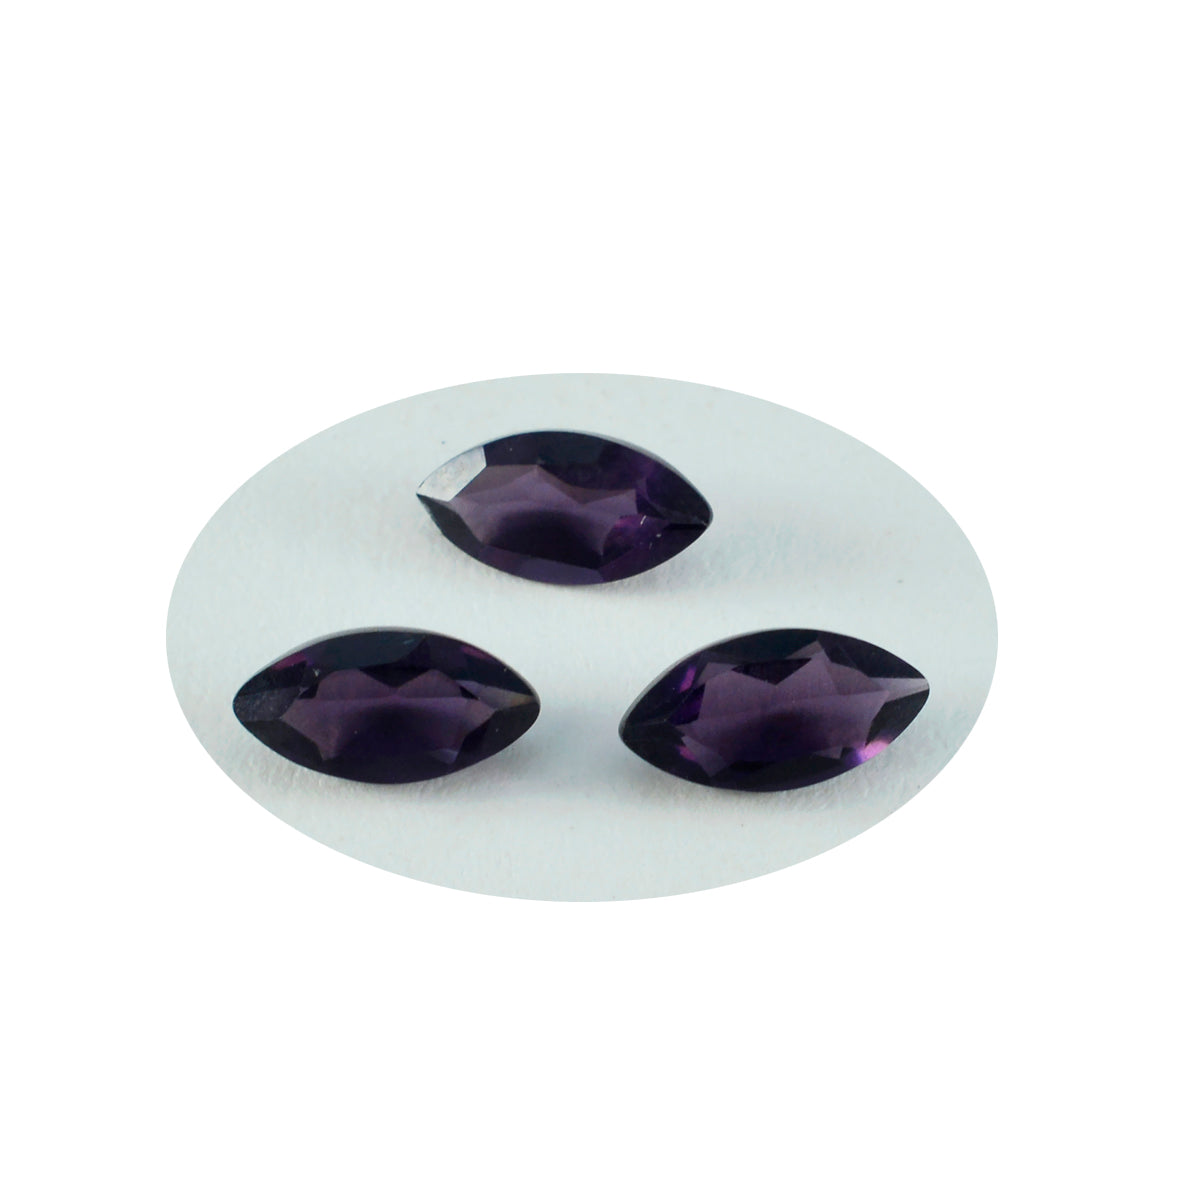 Riyogems 1PC Purple Amethyst CZ Faceted 10x20 mm Marquise Shape astonishing Quality Loose Gems